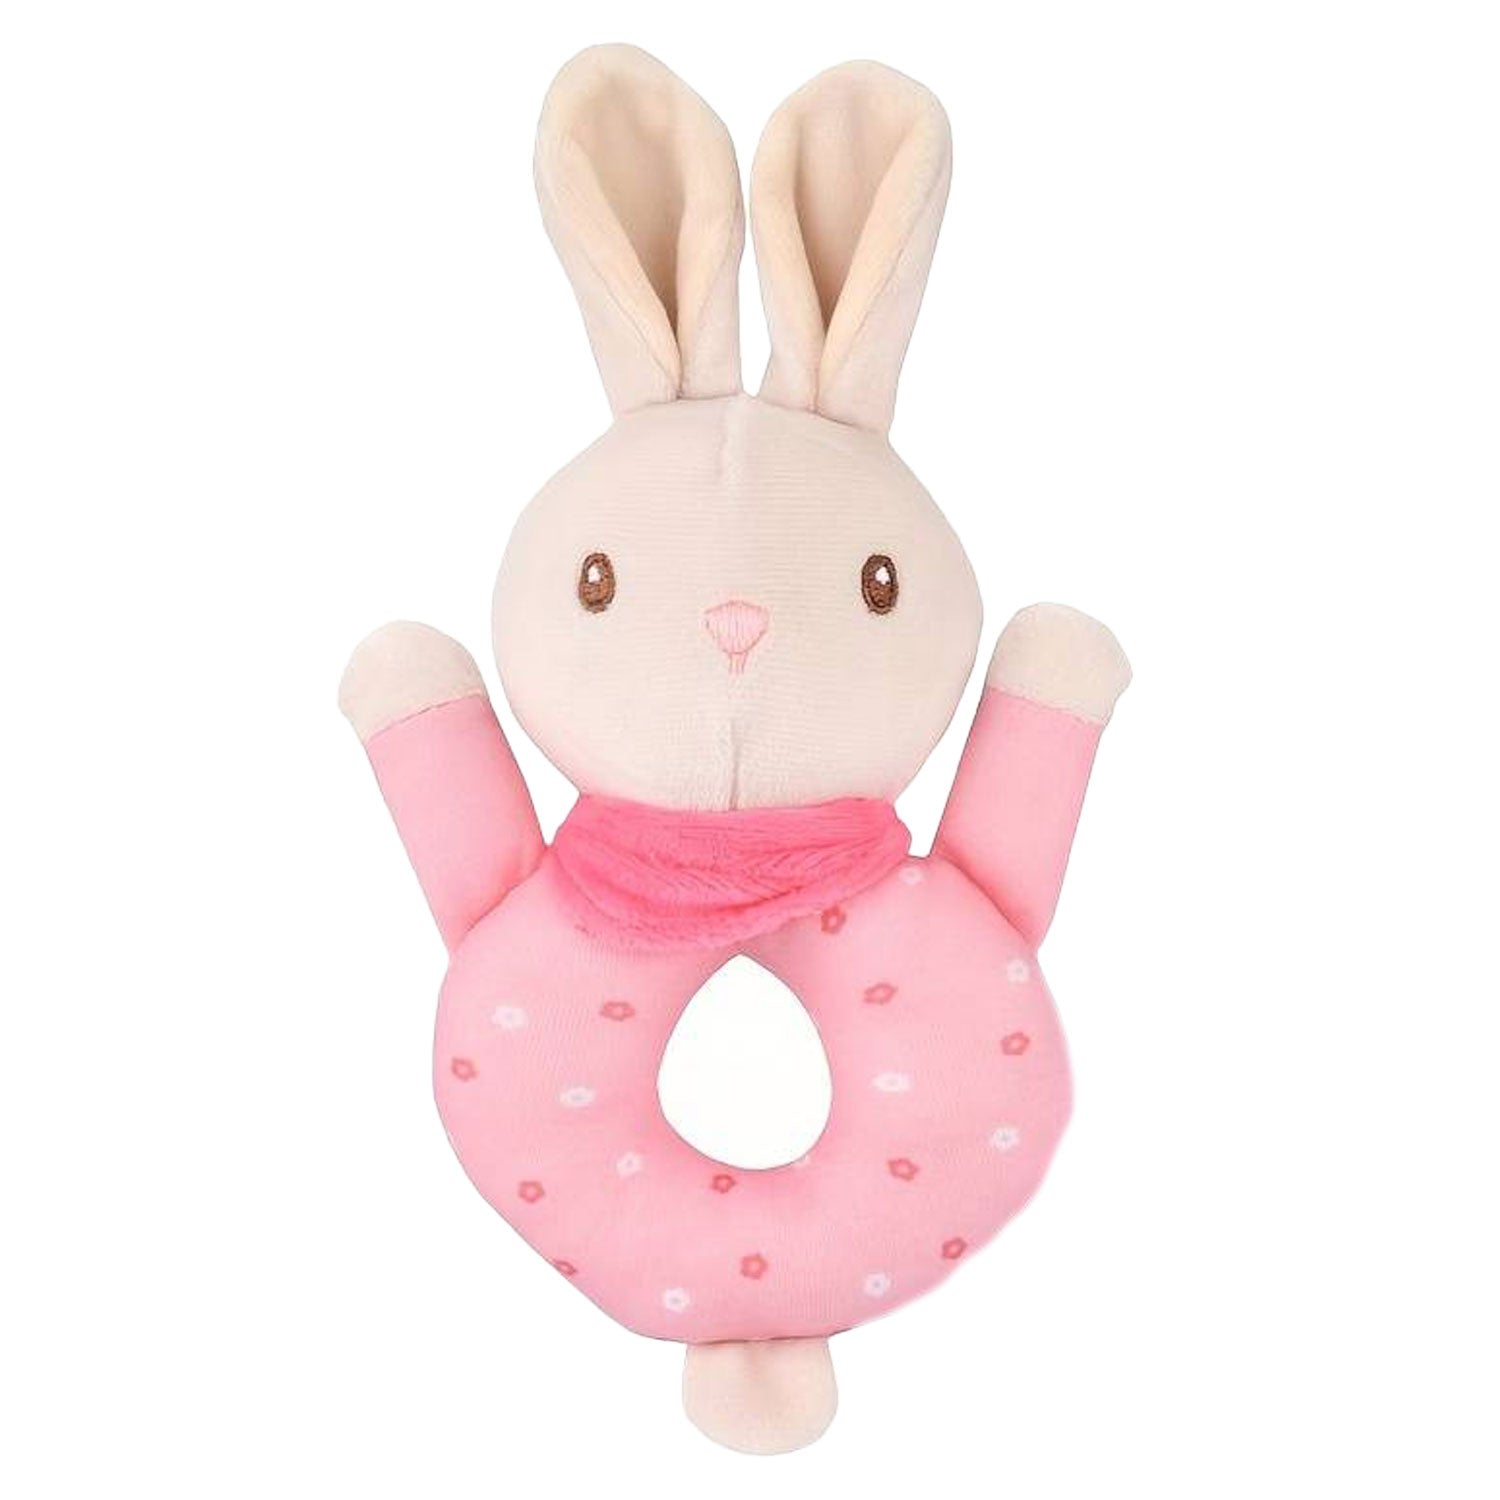 Baby Moo Sweet Bunny 2 Pack Squeaker Handheld Rattle Toy - Pink